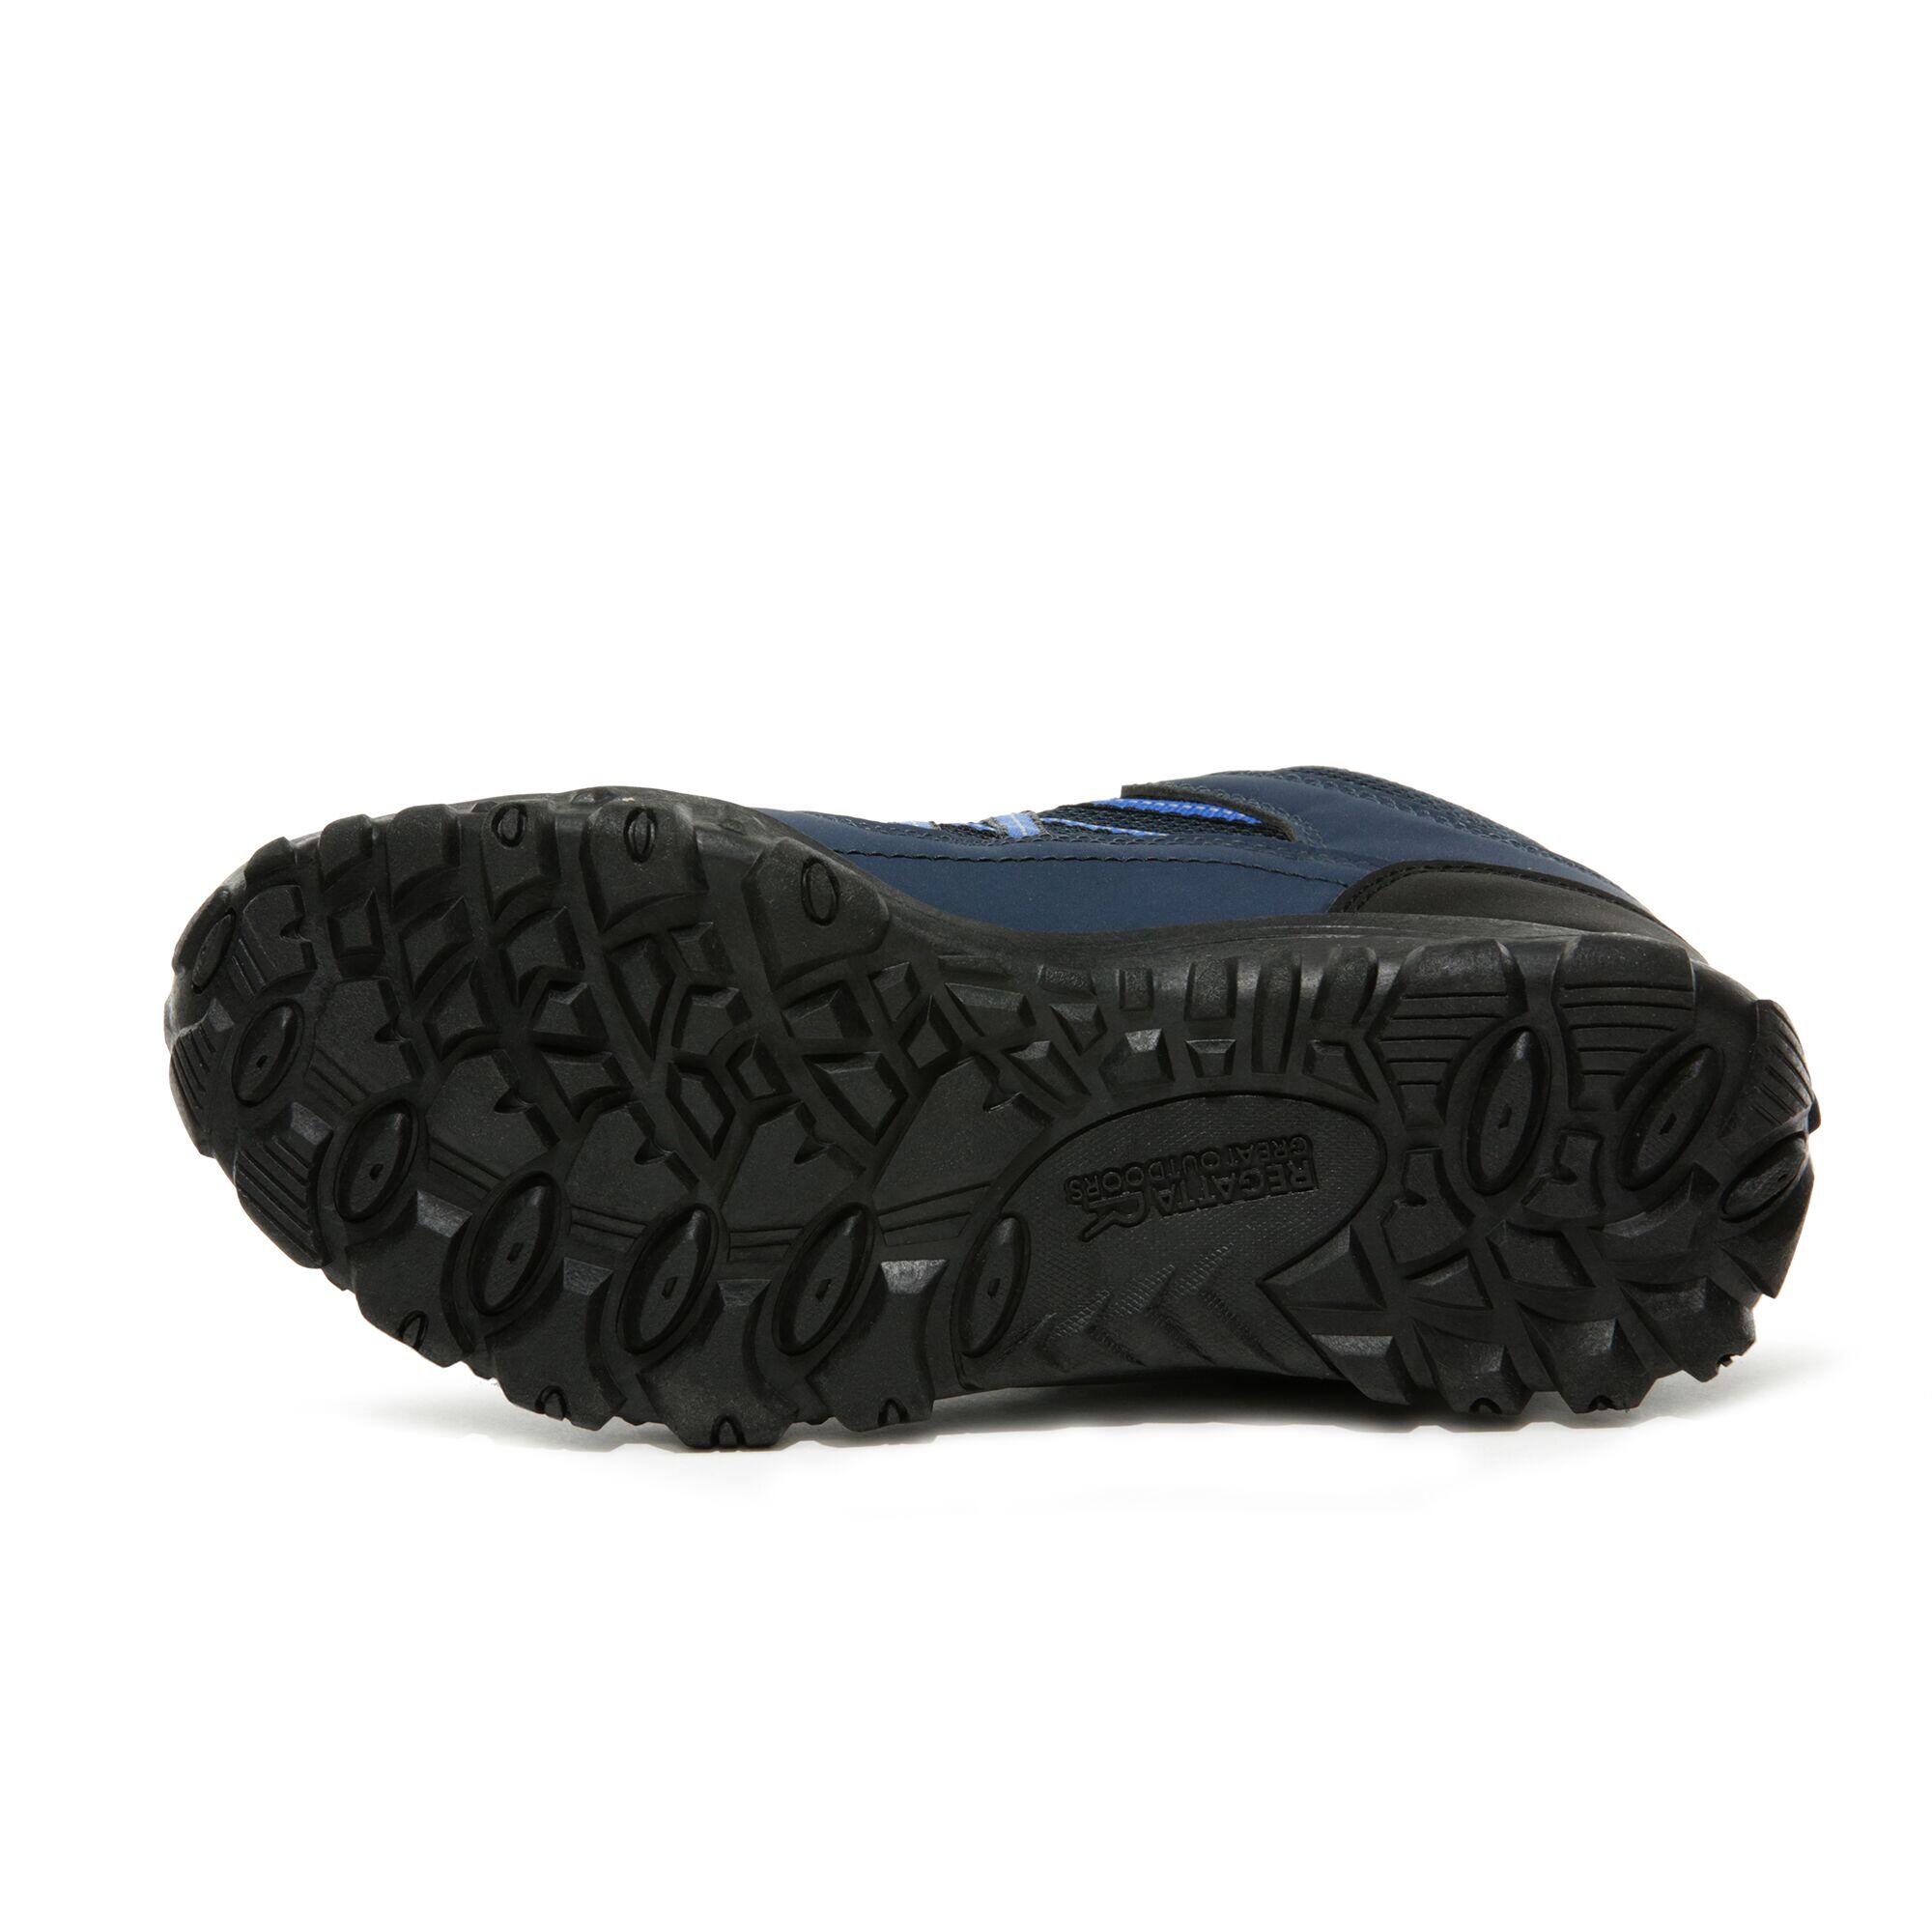 Edgepoint Kids' Hiking Waterproof Mid Boots - Dark Blue 5/5